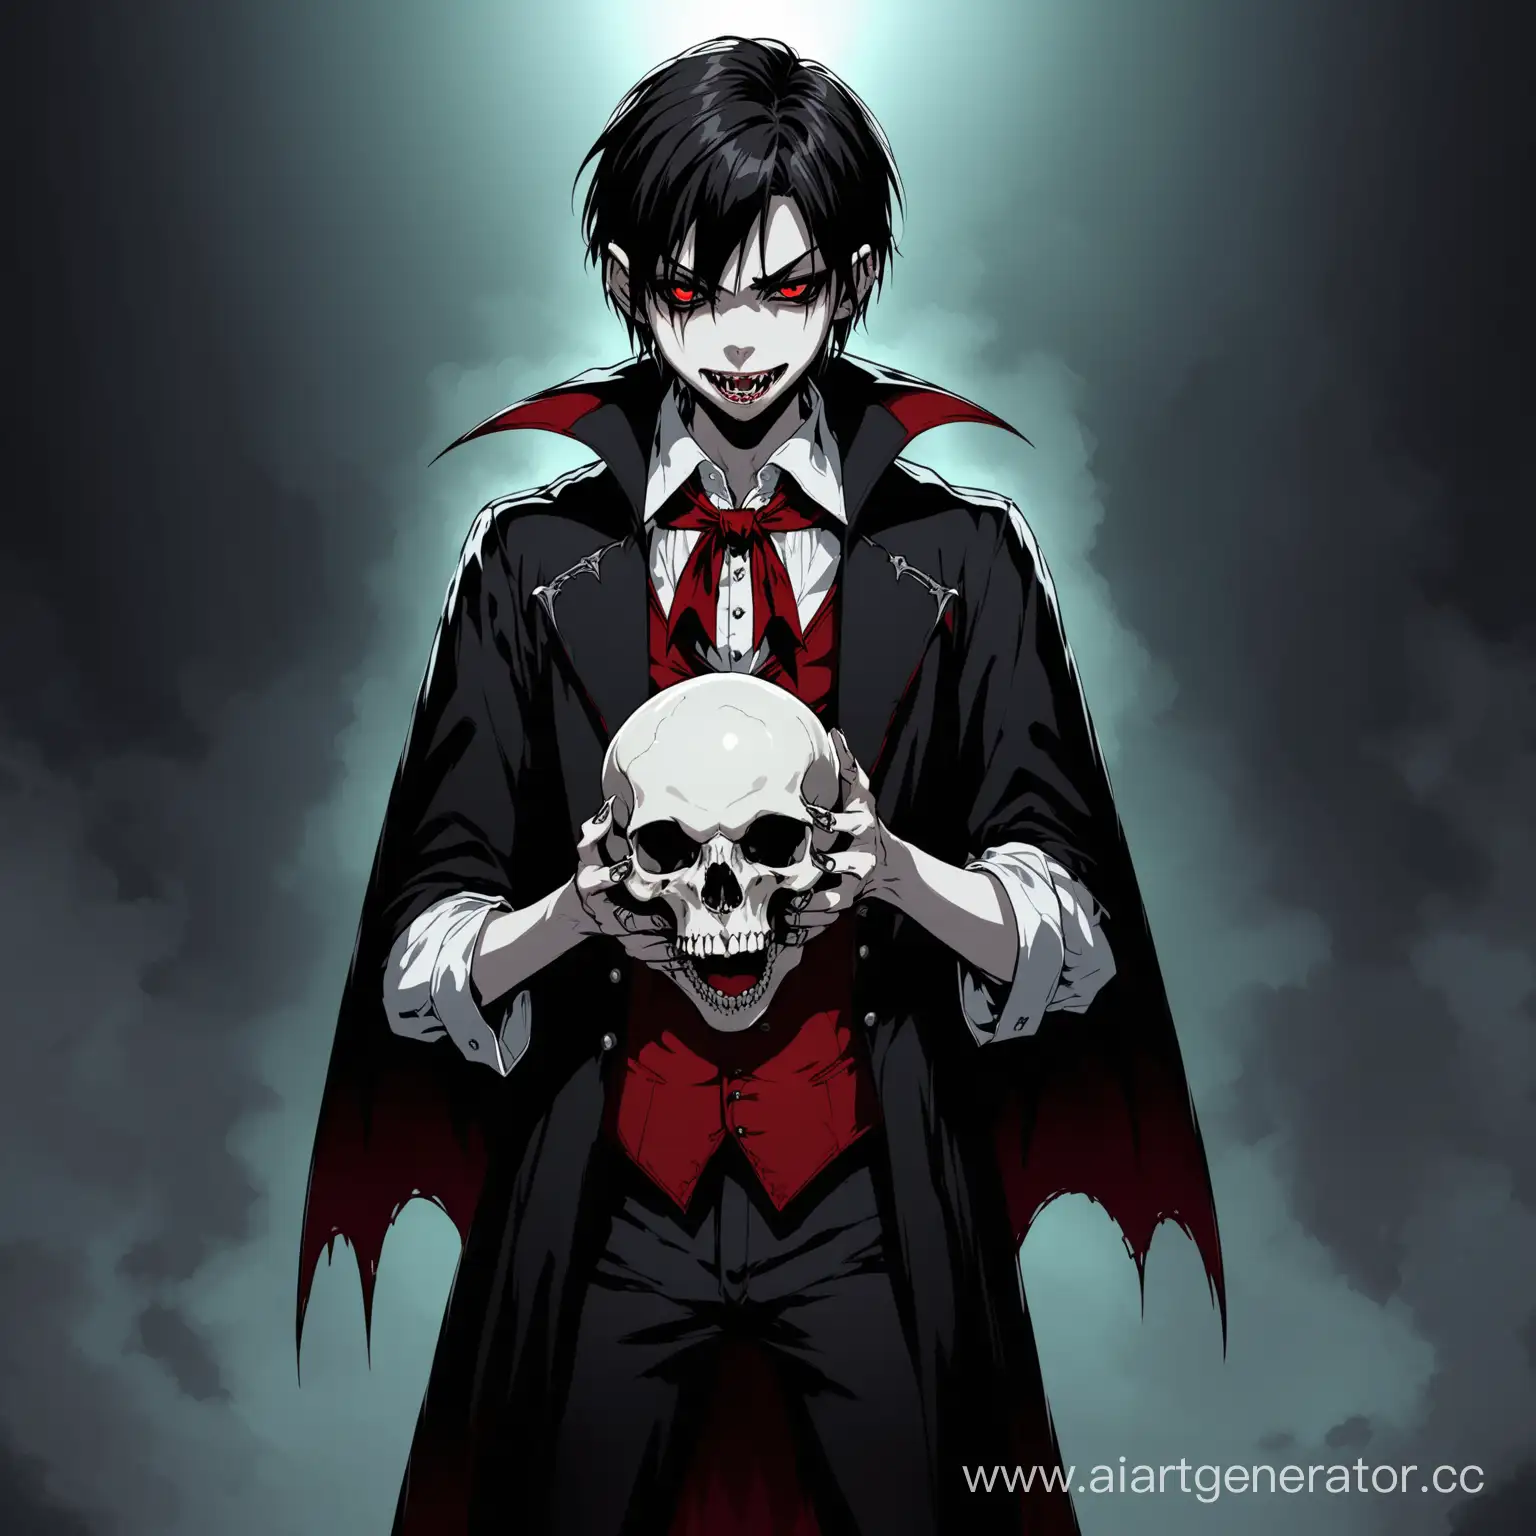 Vampire-Boy-with-Skull-in-Gothic-Setting